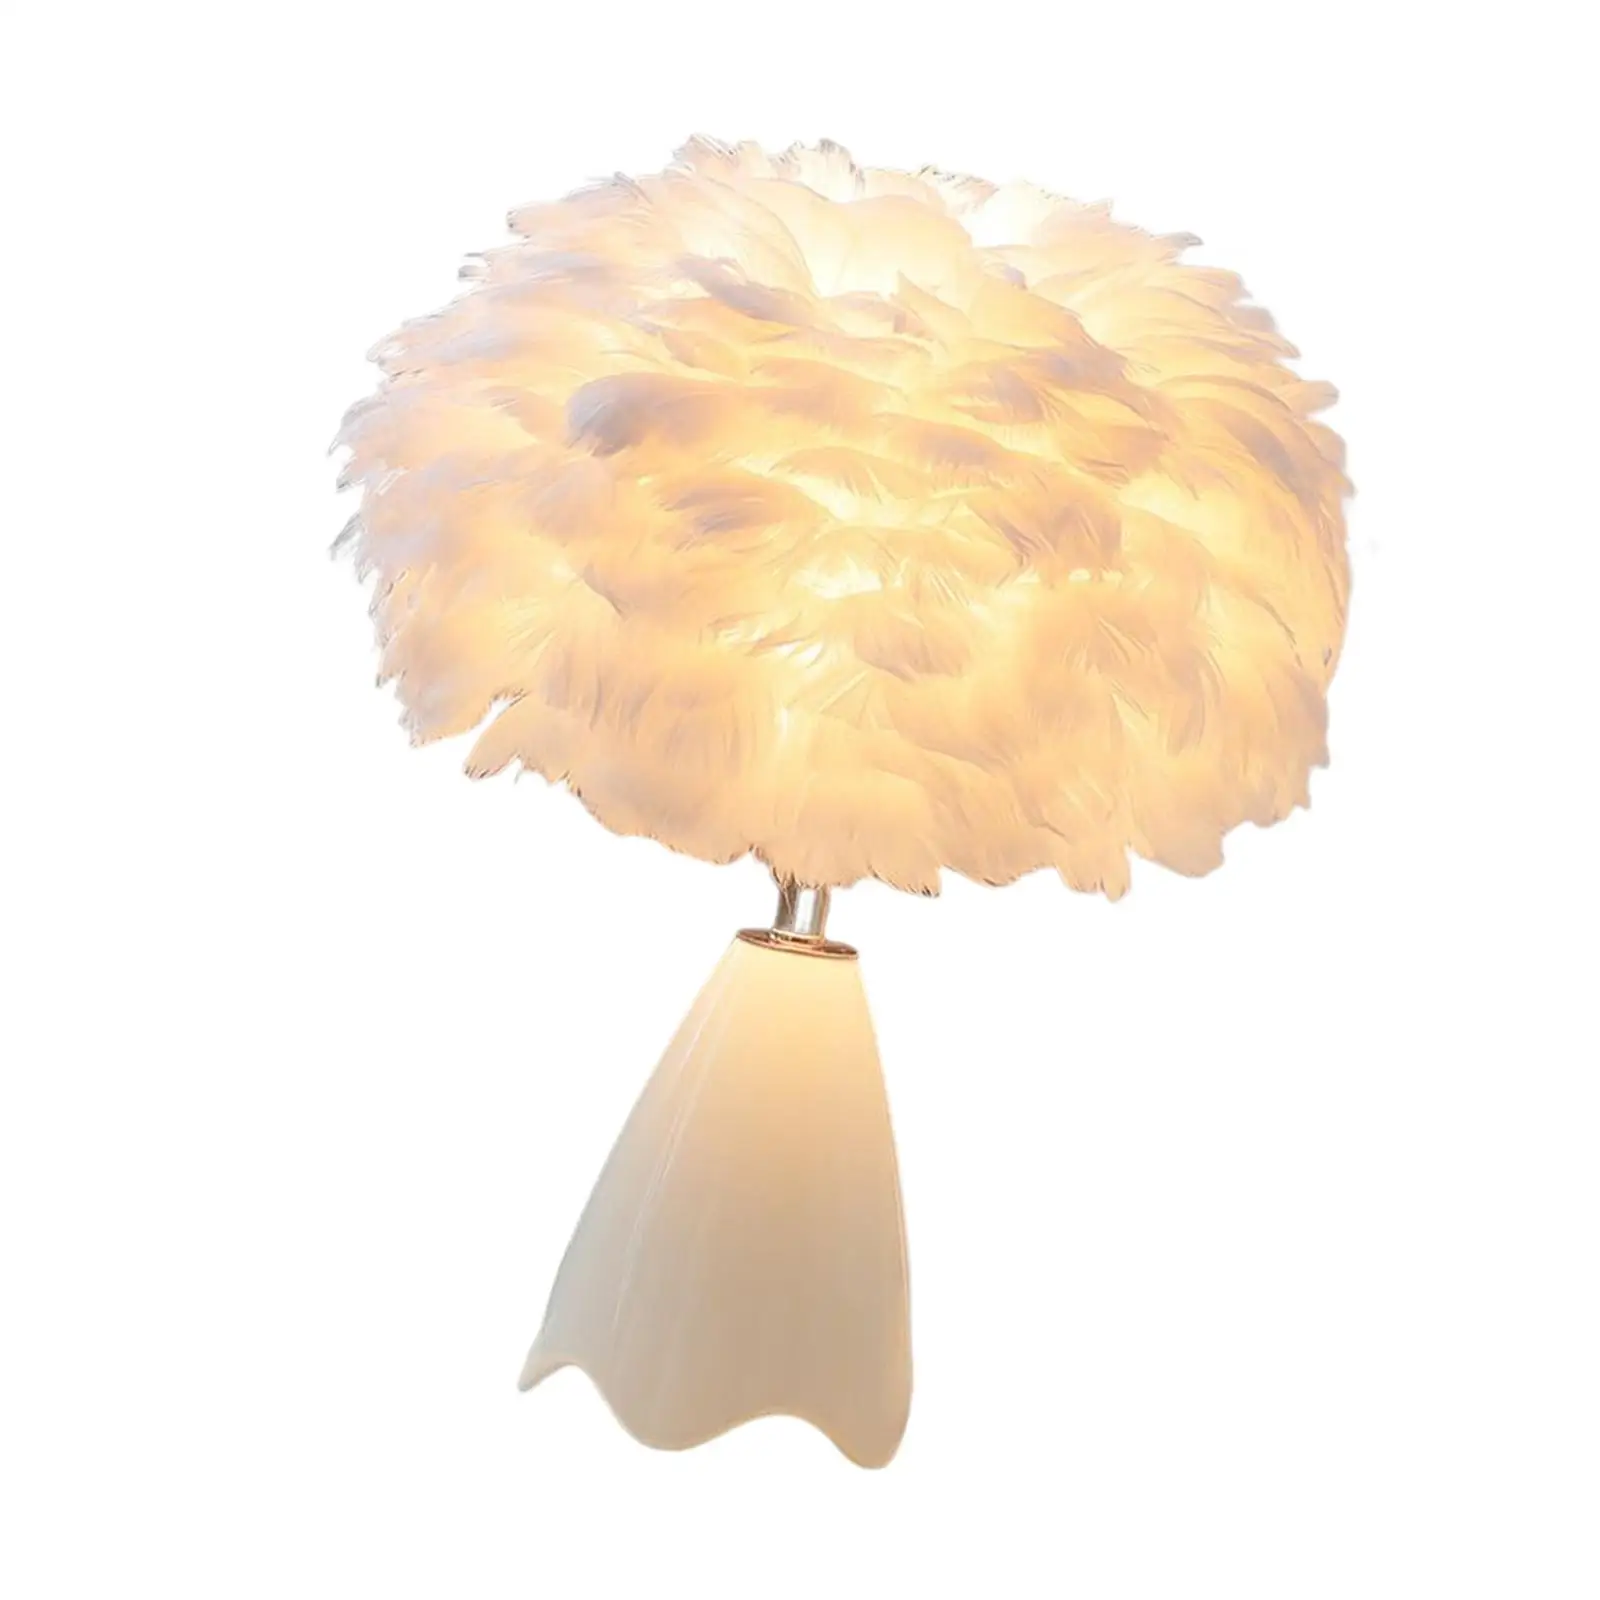 Feather Table Lamp NightStand Lamp Elegant Ceramic Base Modern Warm White Night Light for Bedroom Bedside Girls Gift Decoration